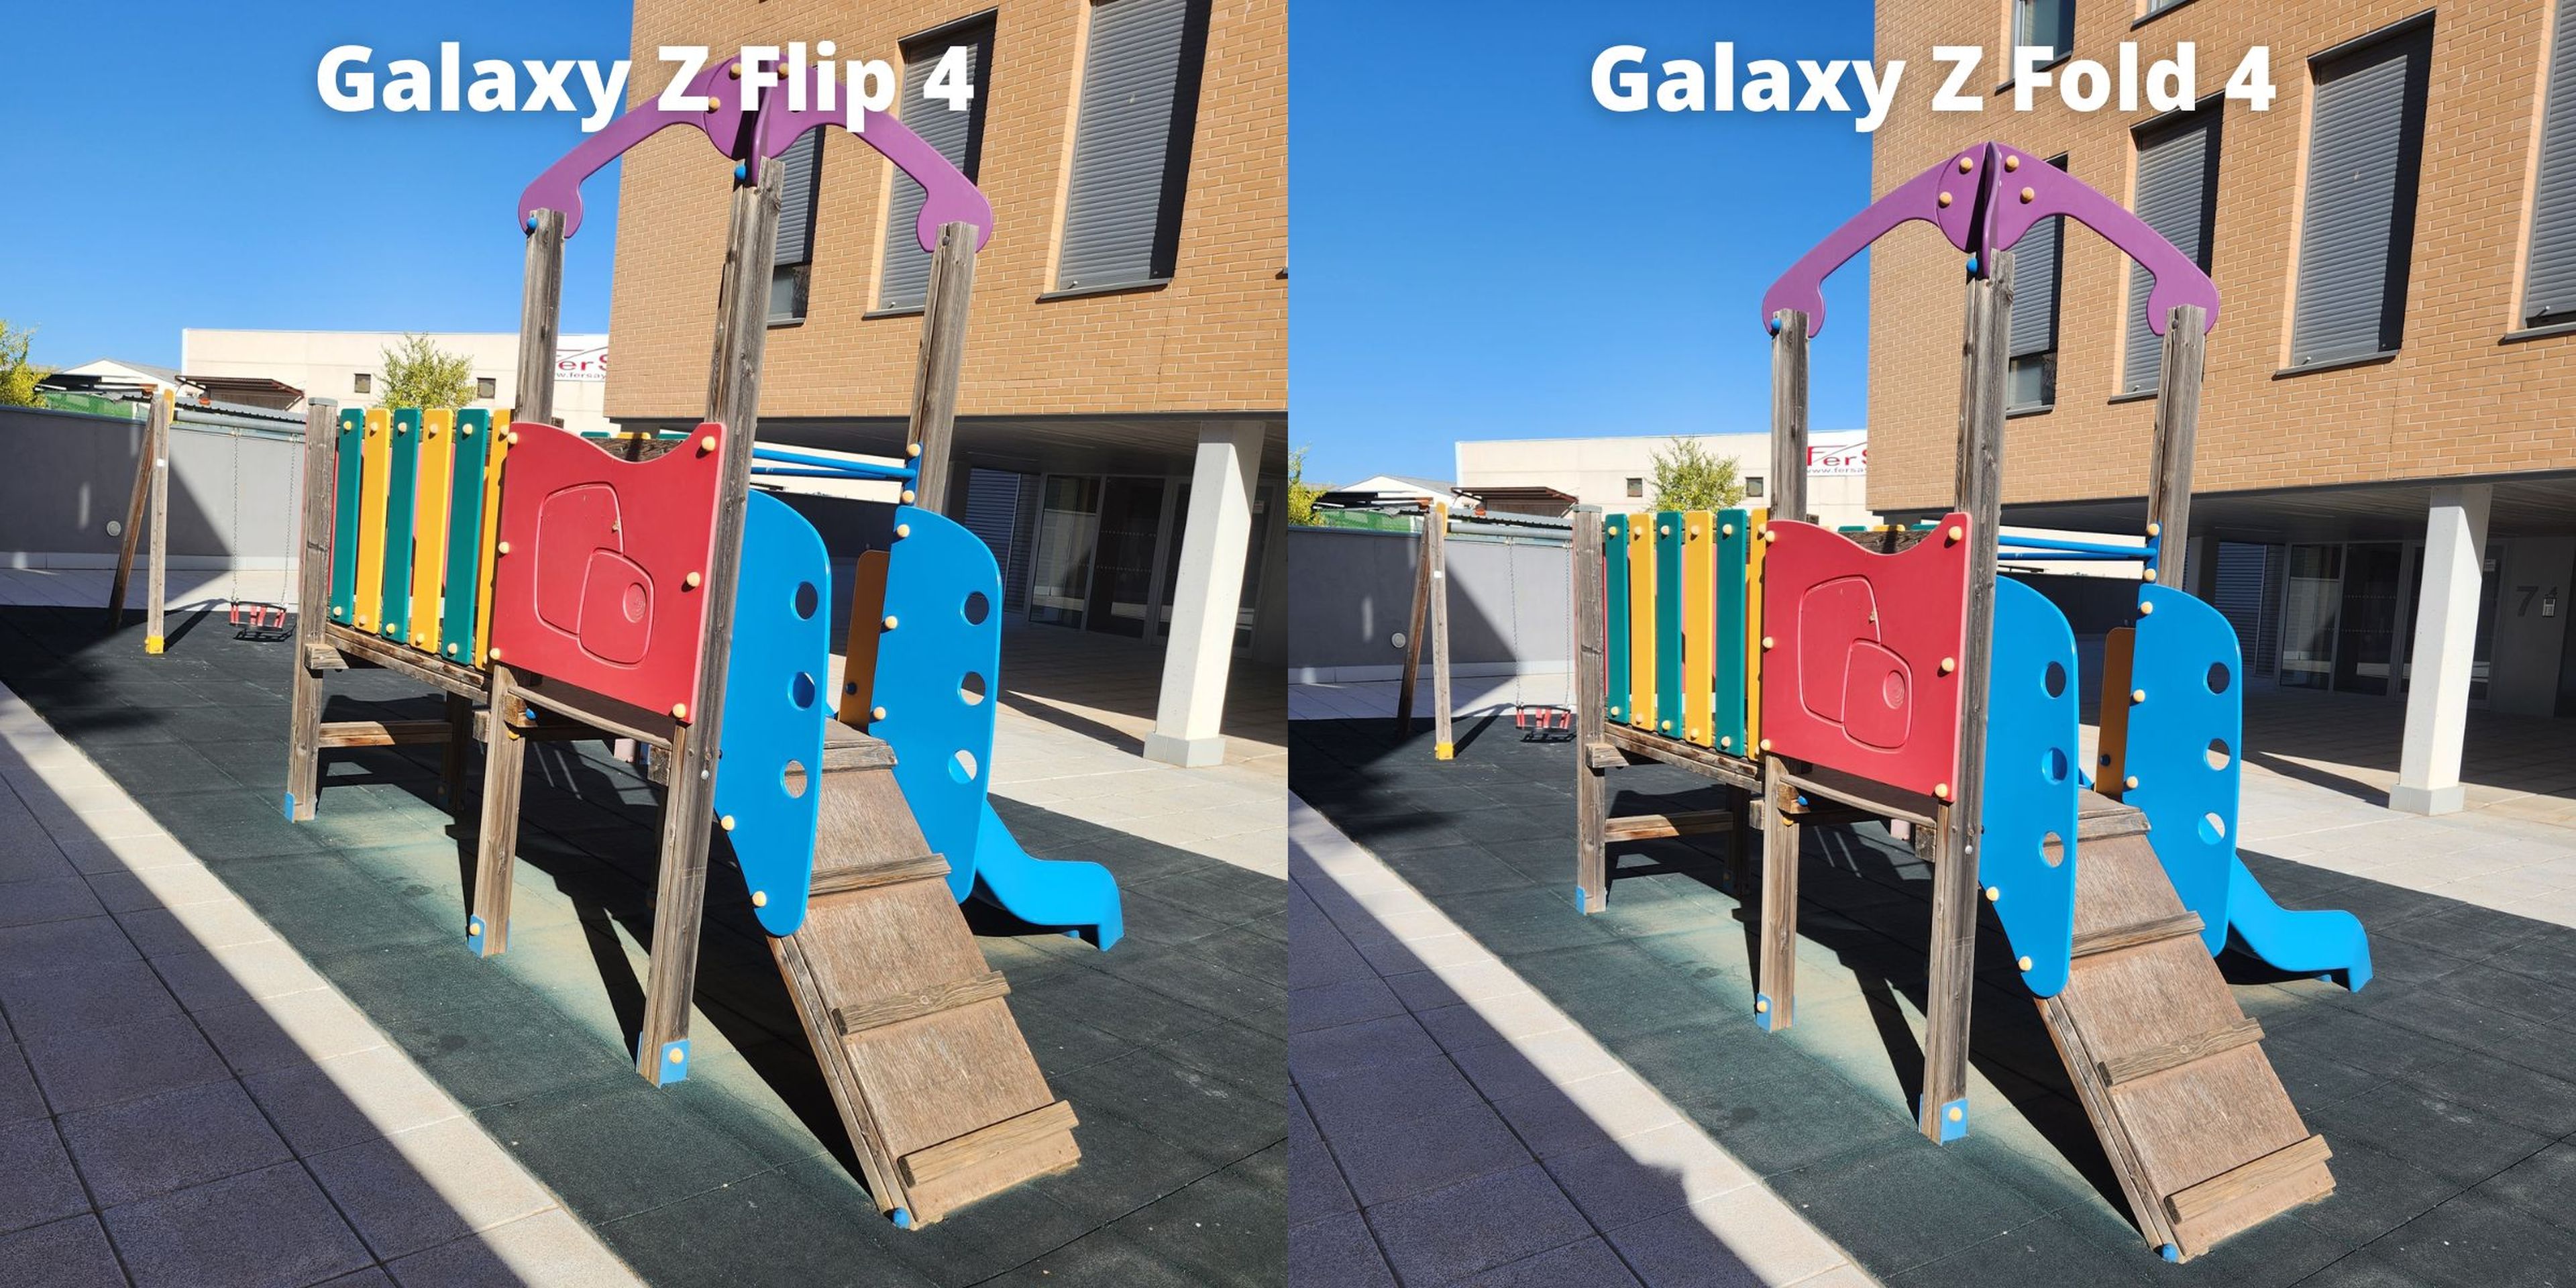 Samsung Galaxy Z Flip 4 vs Z Fold 4